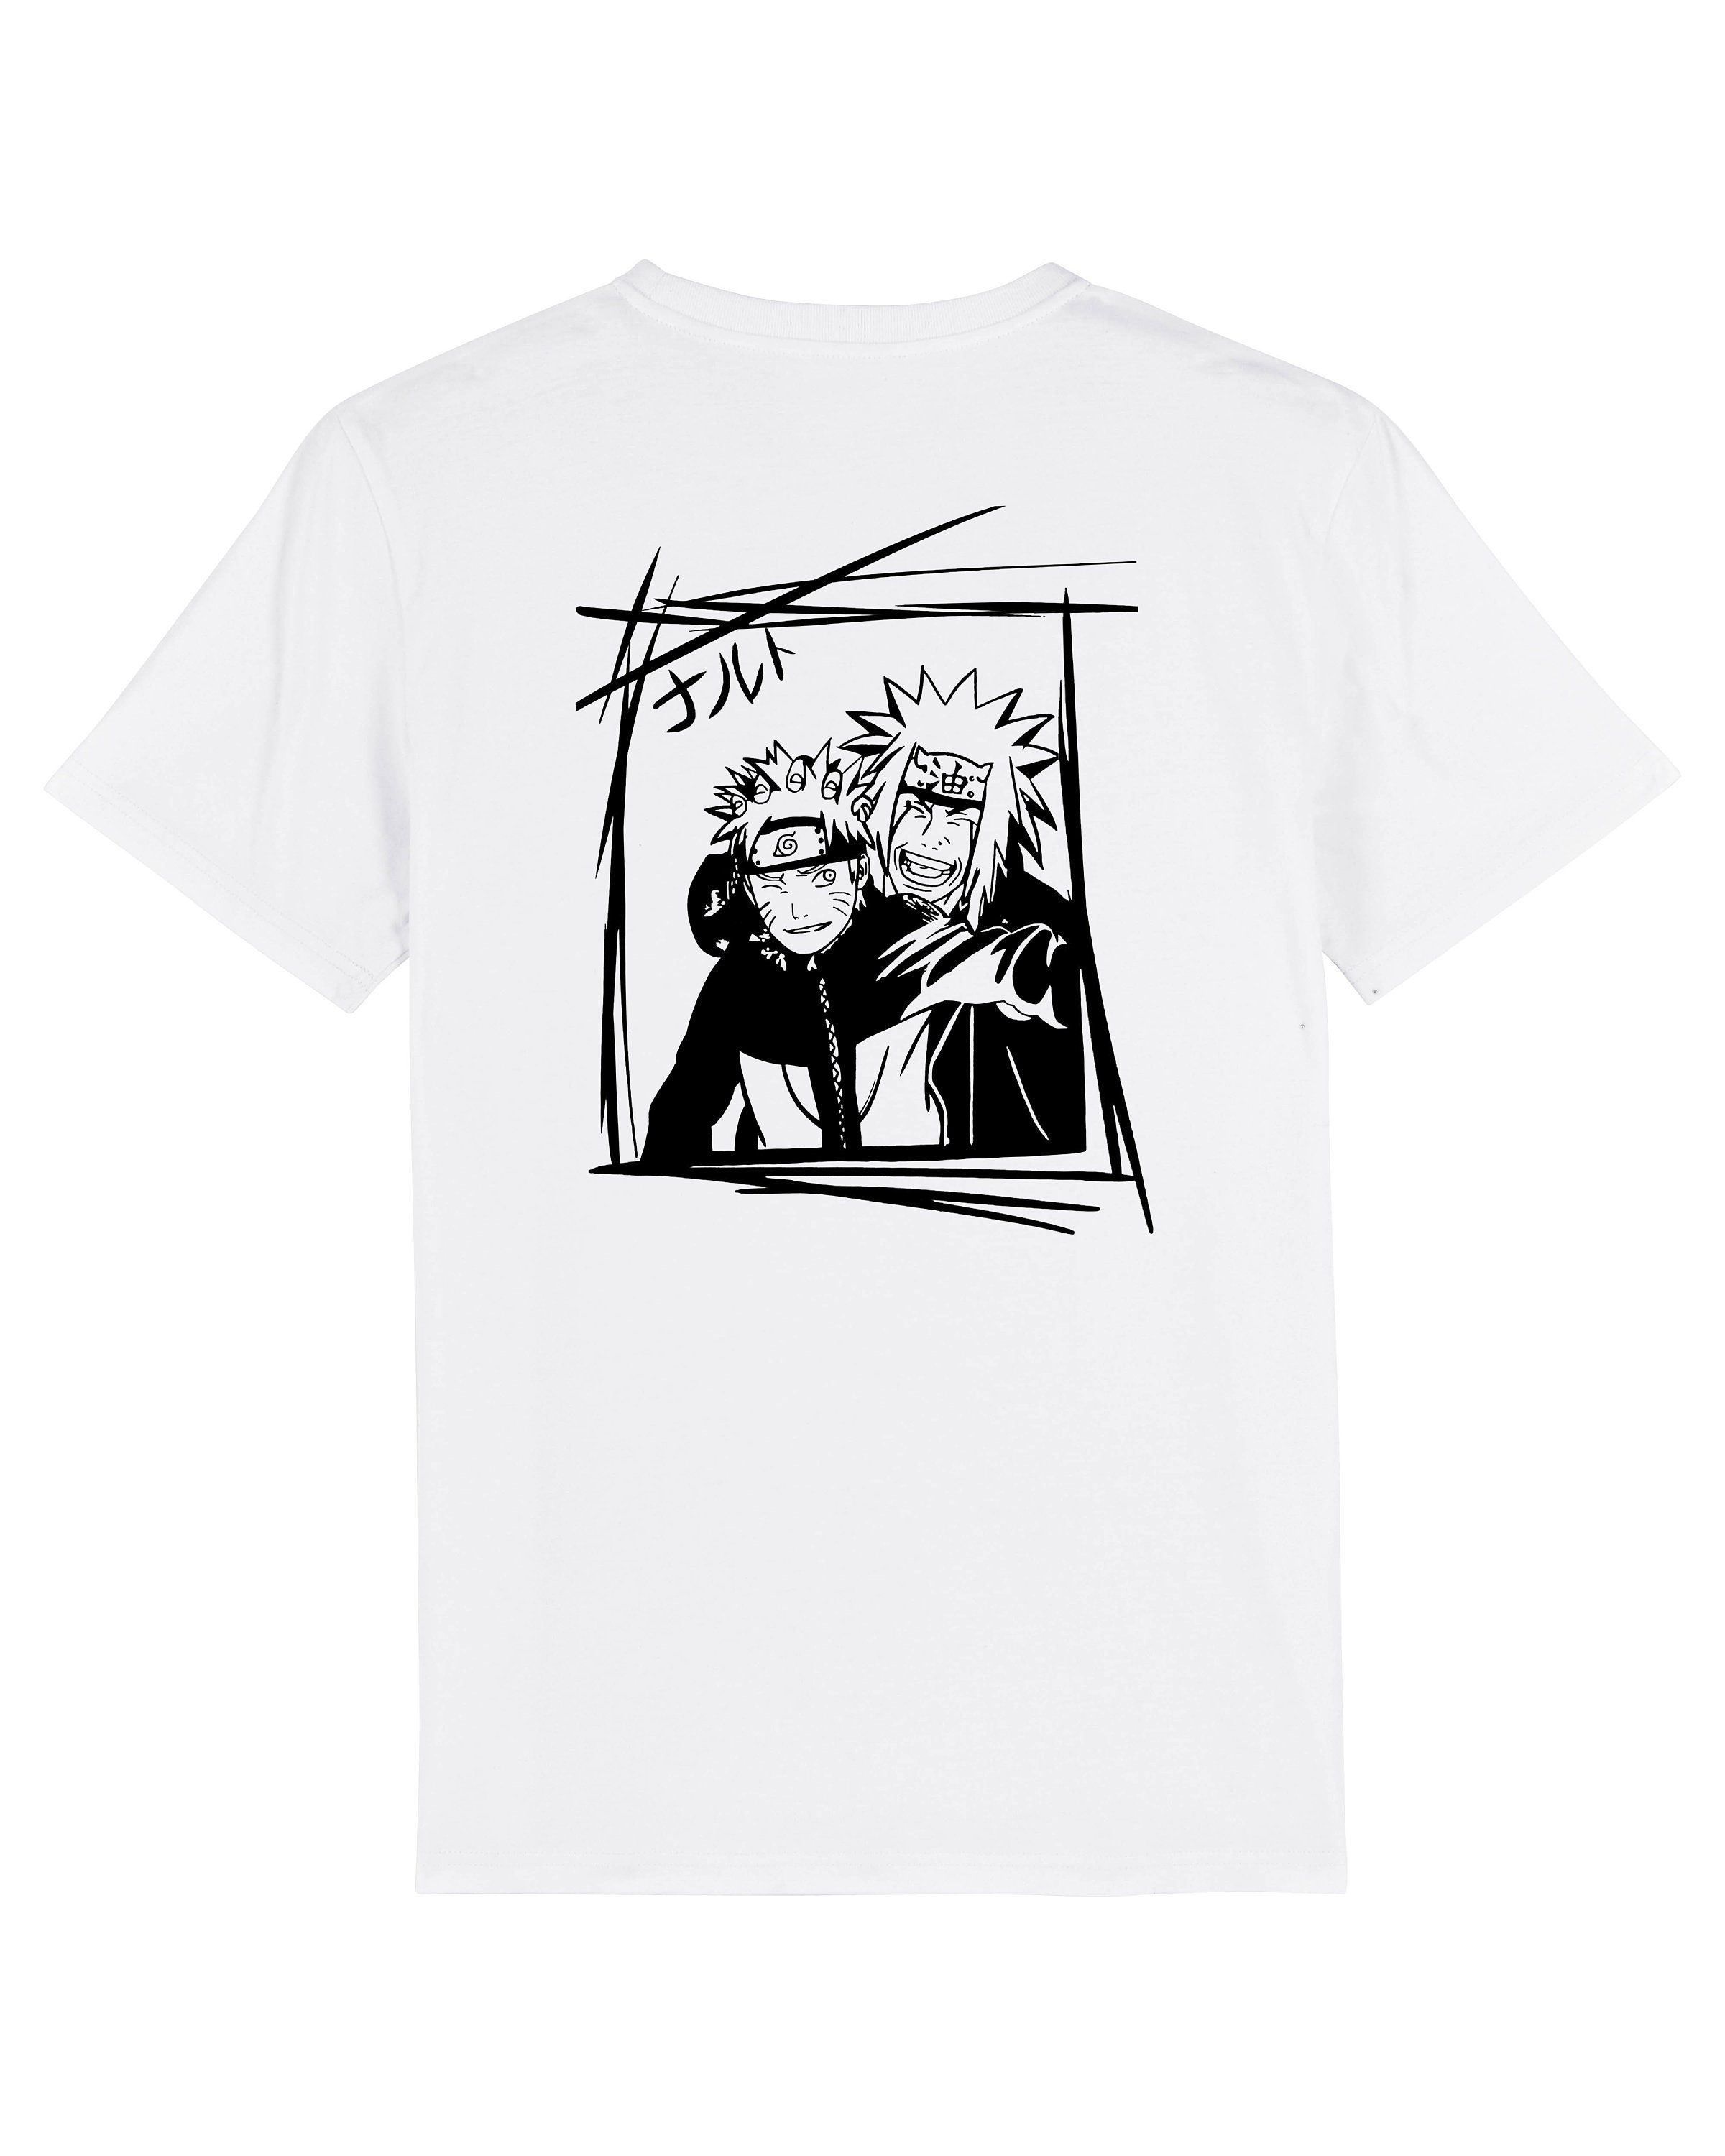 Naruto  Image manga, Personnaliser tee shirt